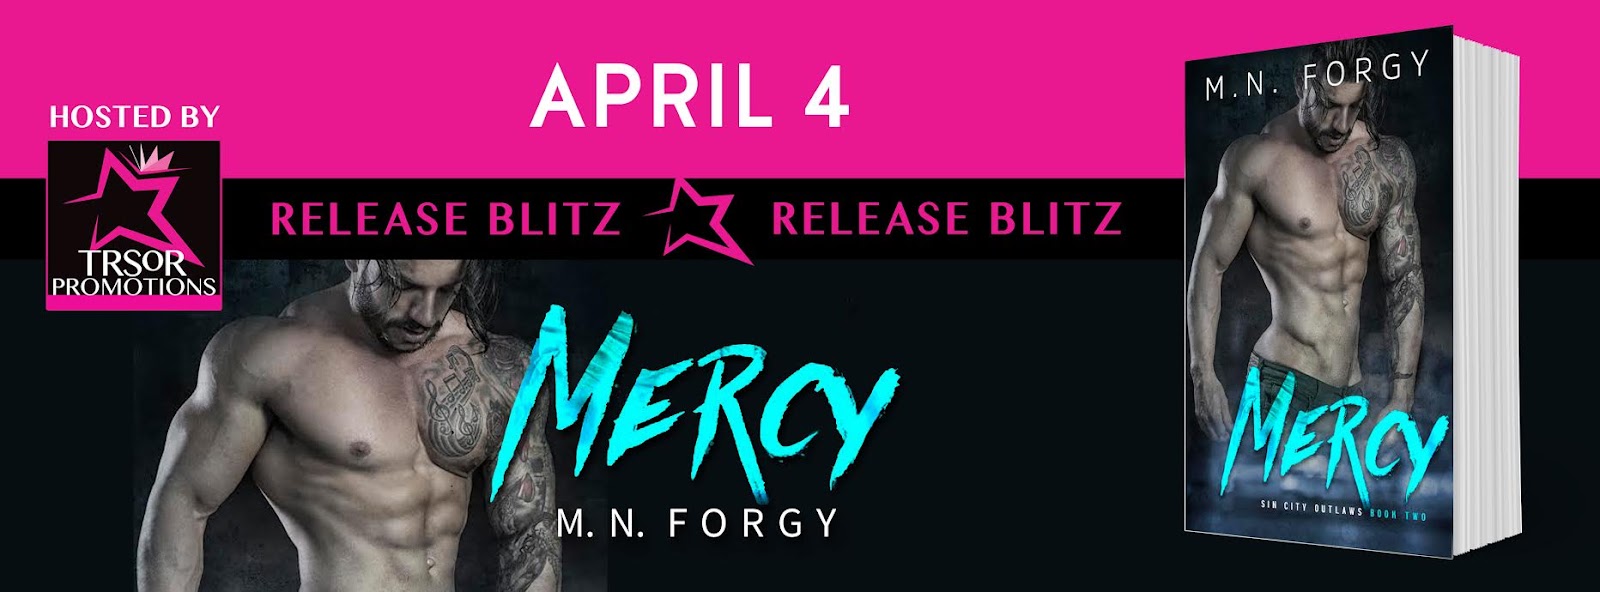 mercy release blitz.jpg